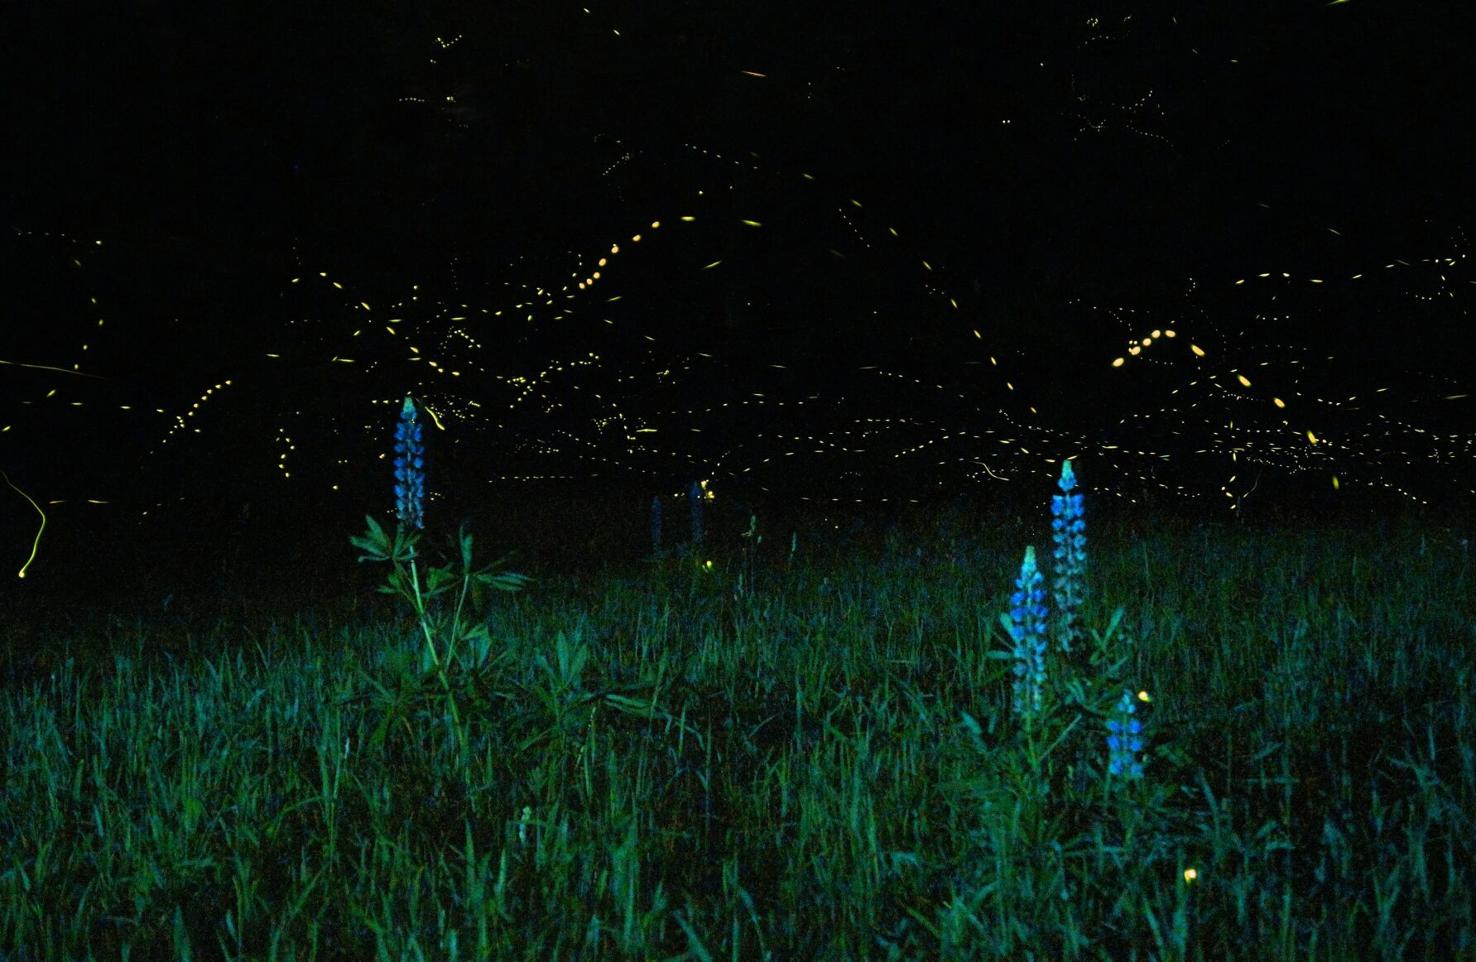 Clellie Lynch: Those femme fatale fireflies Columnists